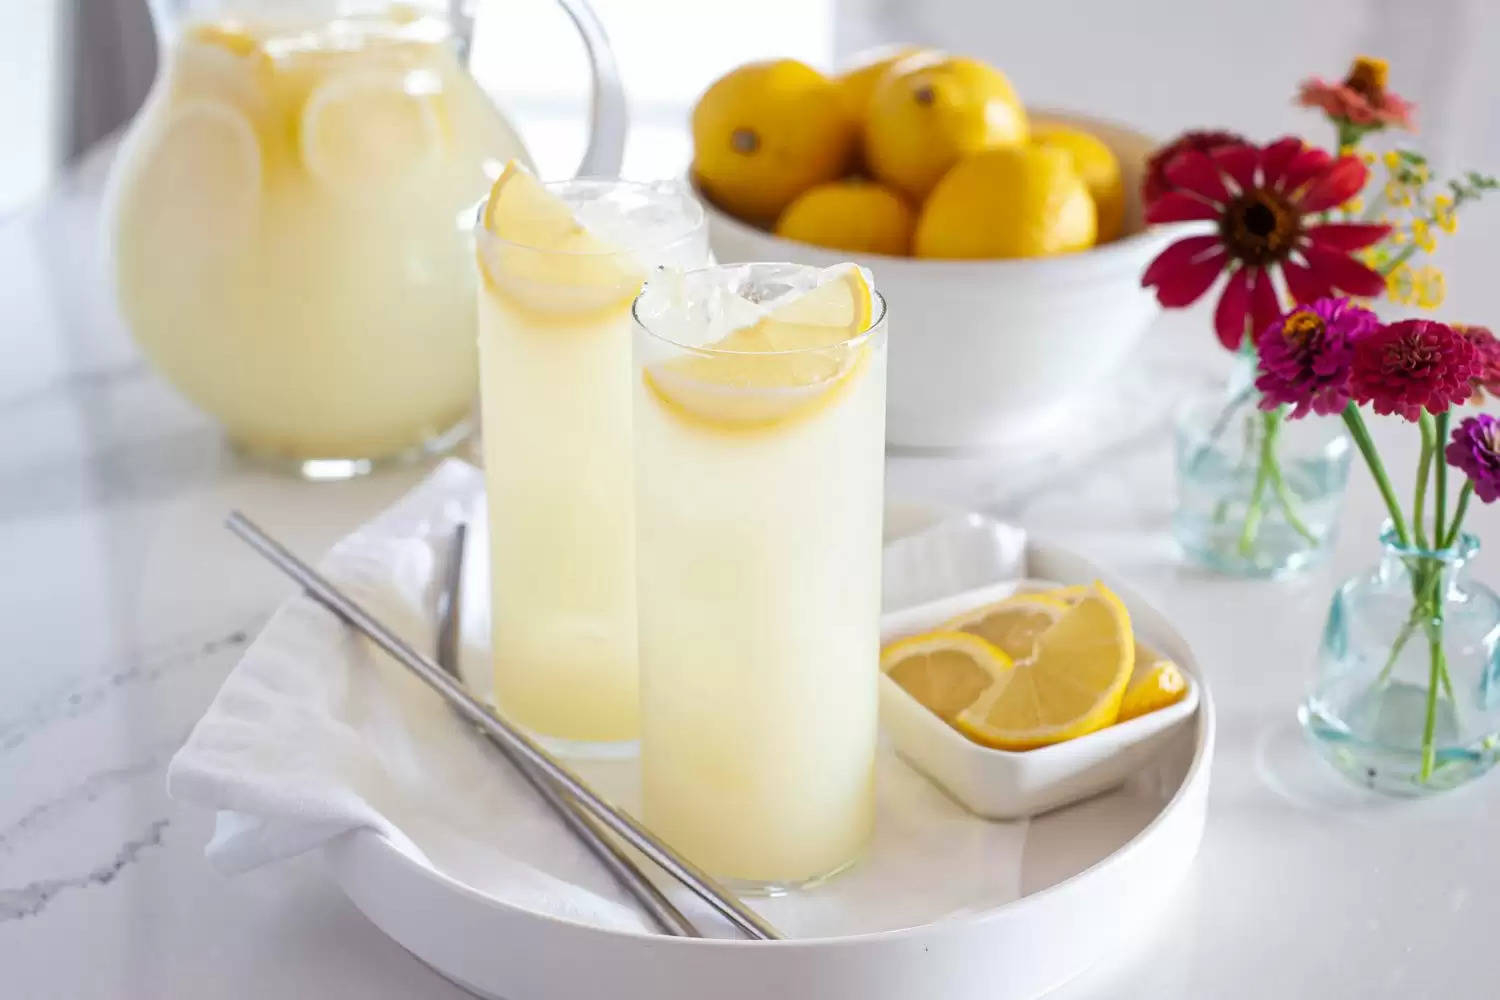  lemon juice